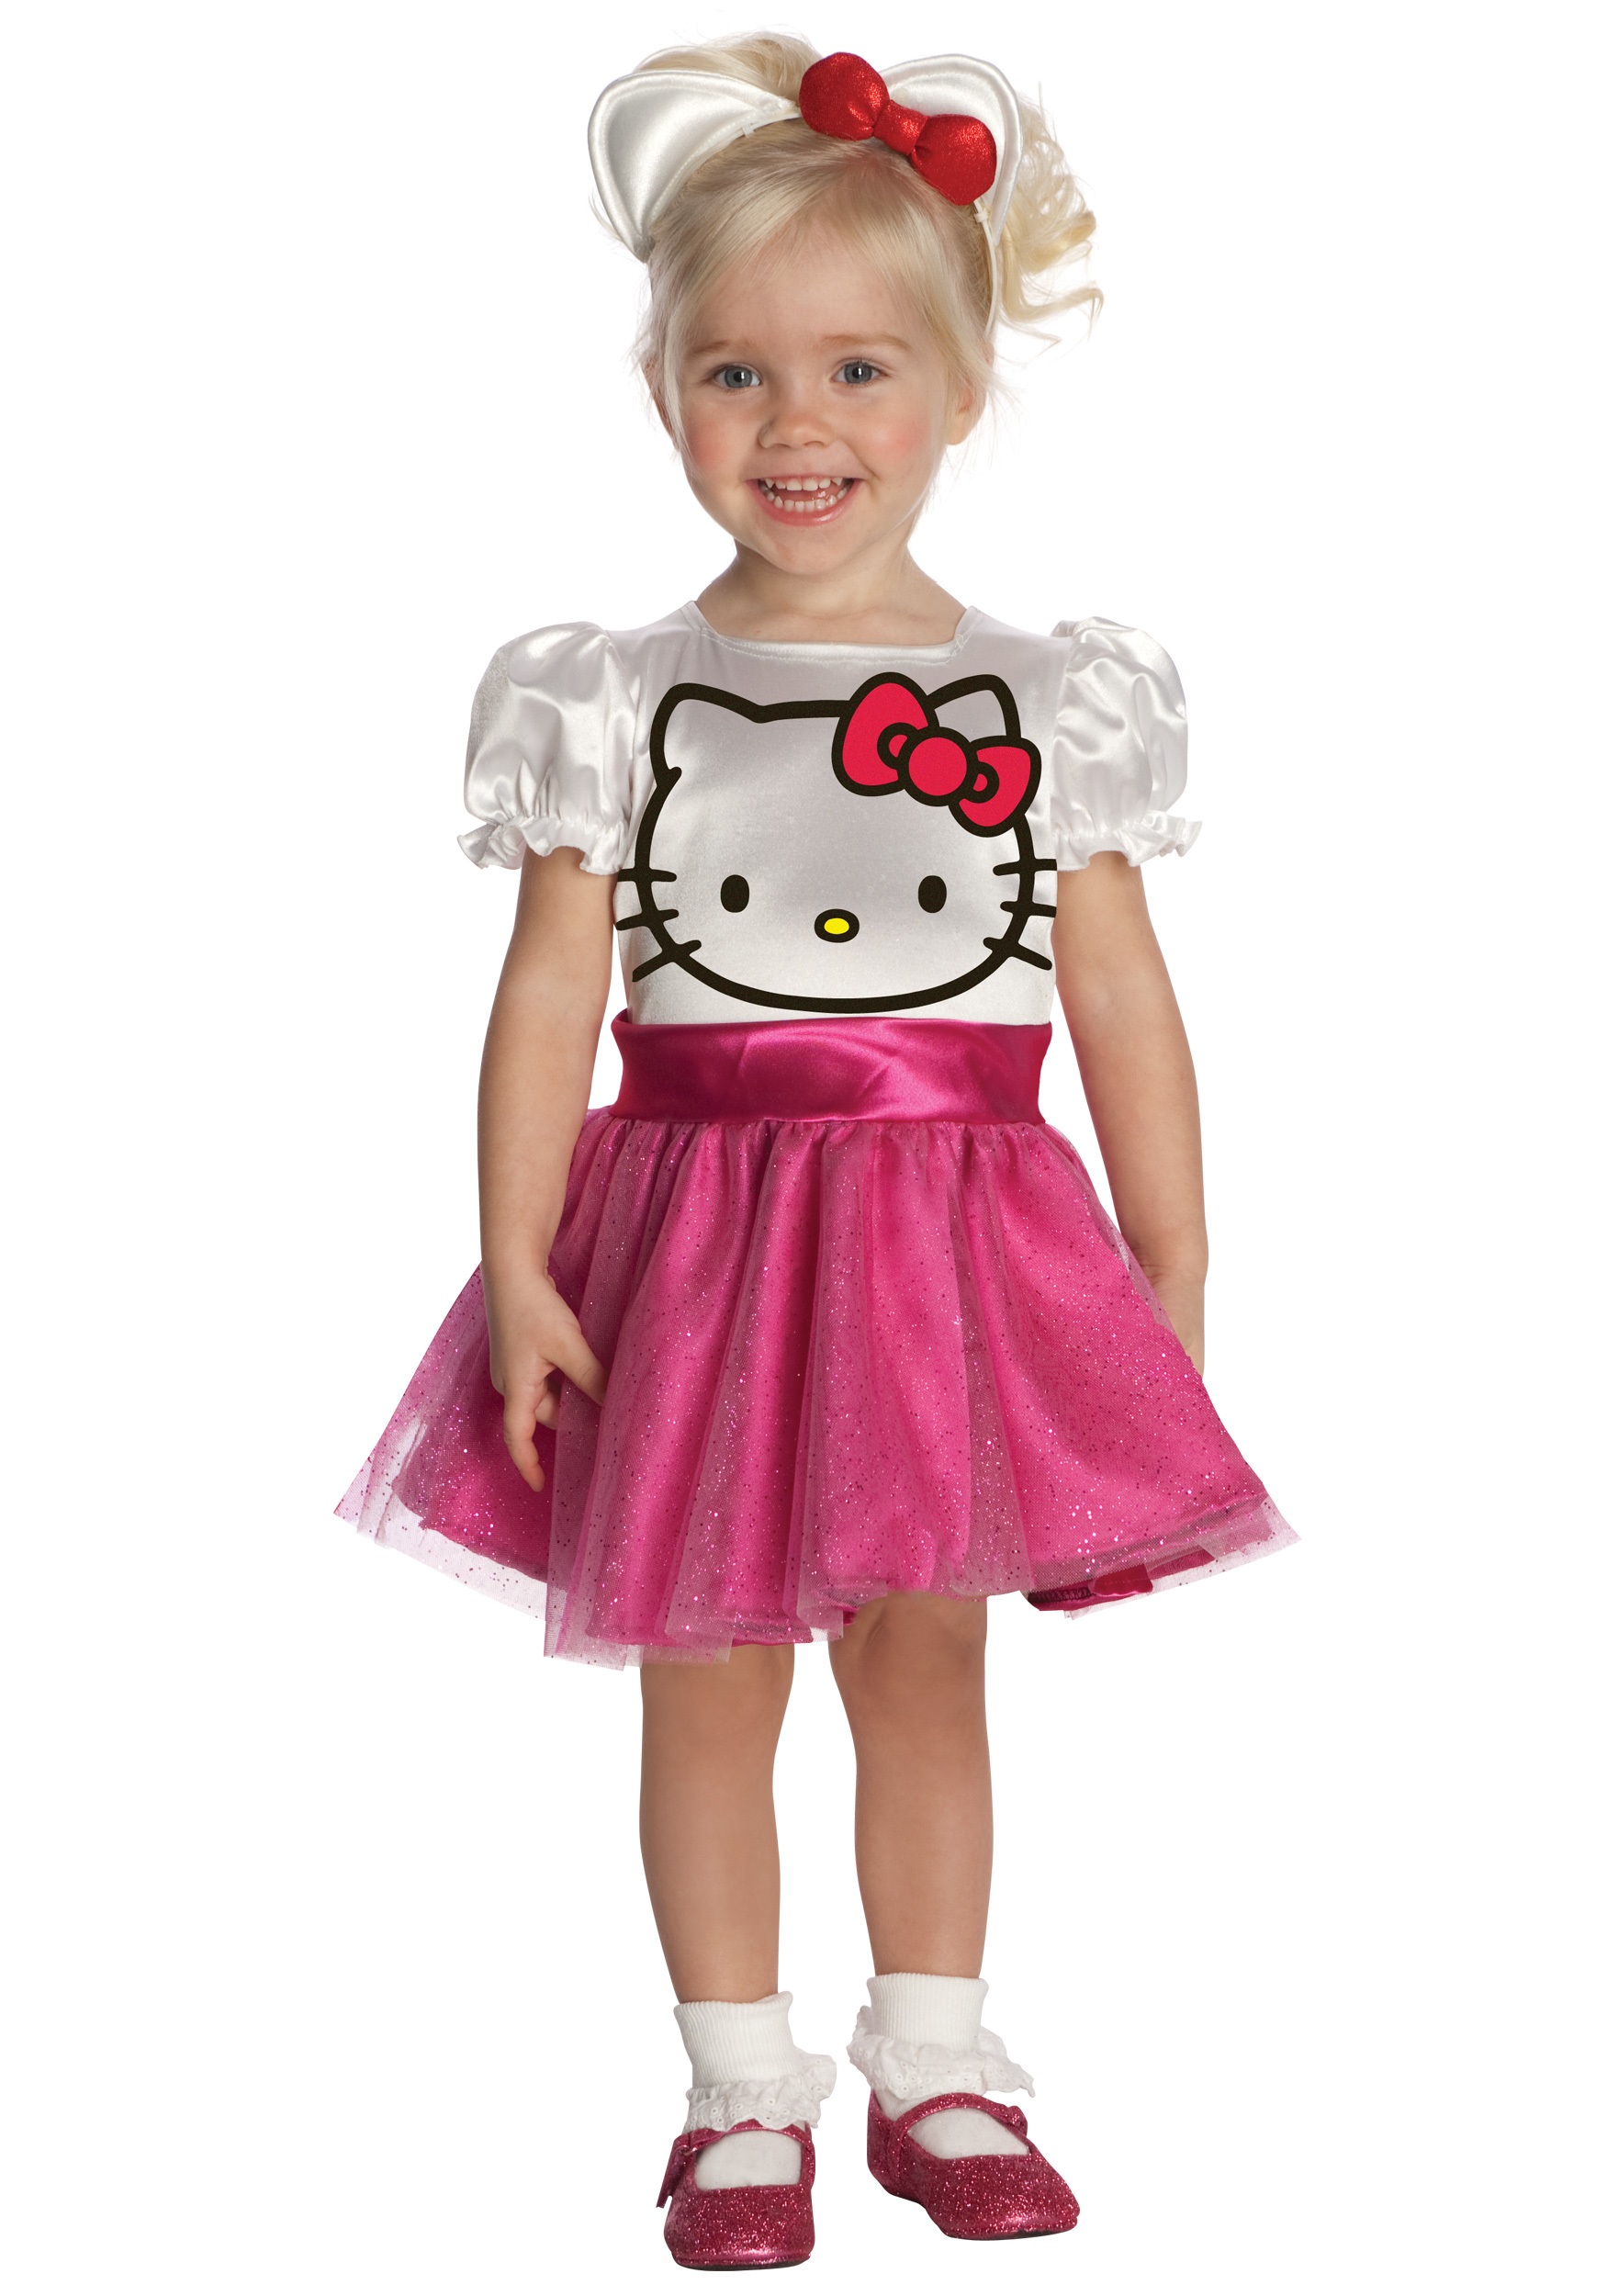 Toddler Hello Kitty Costume